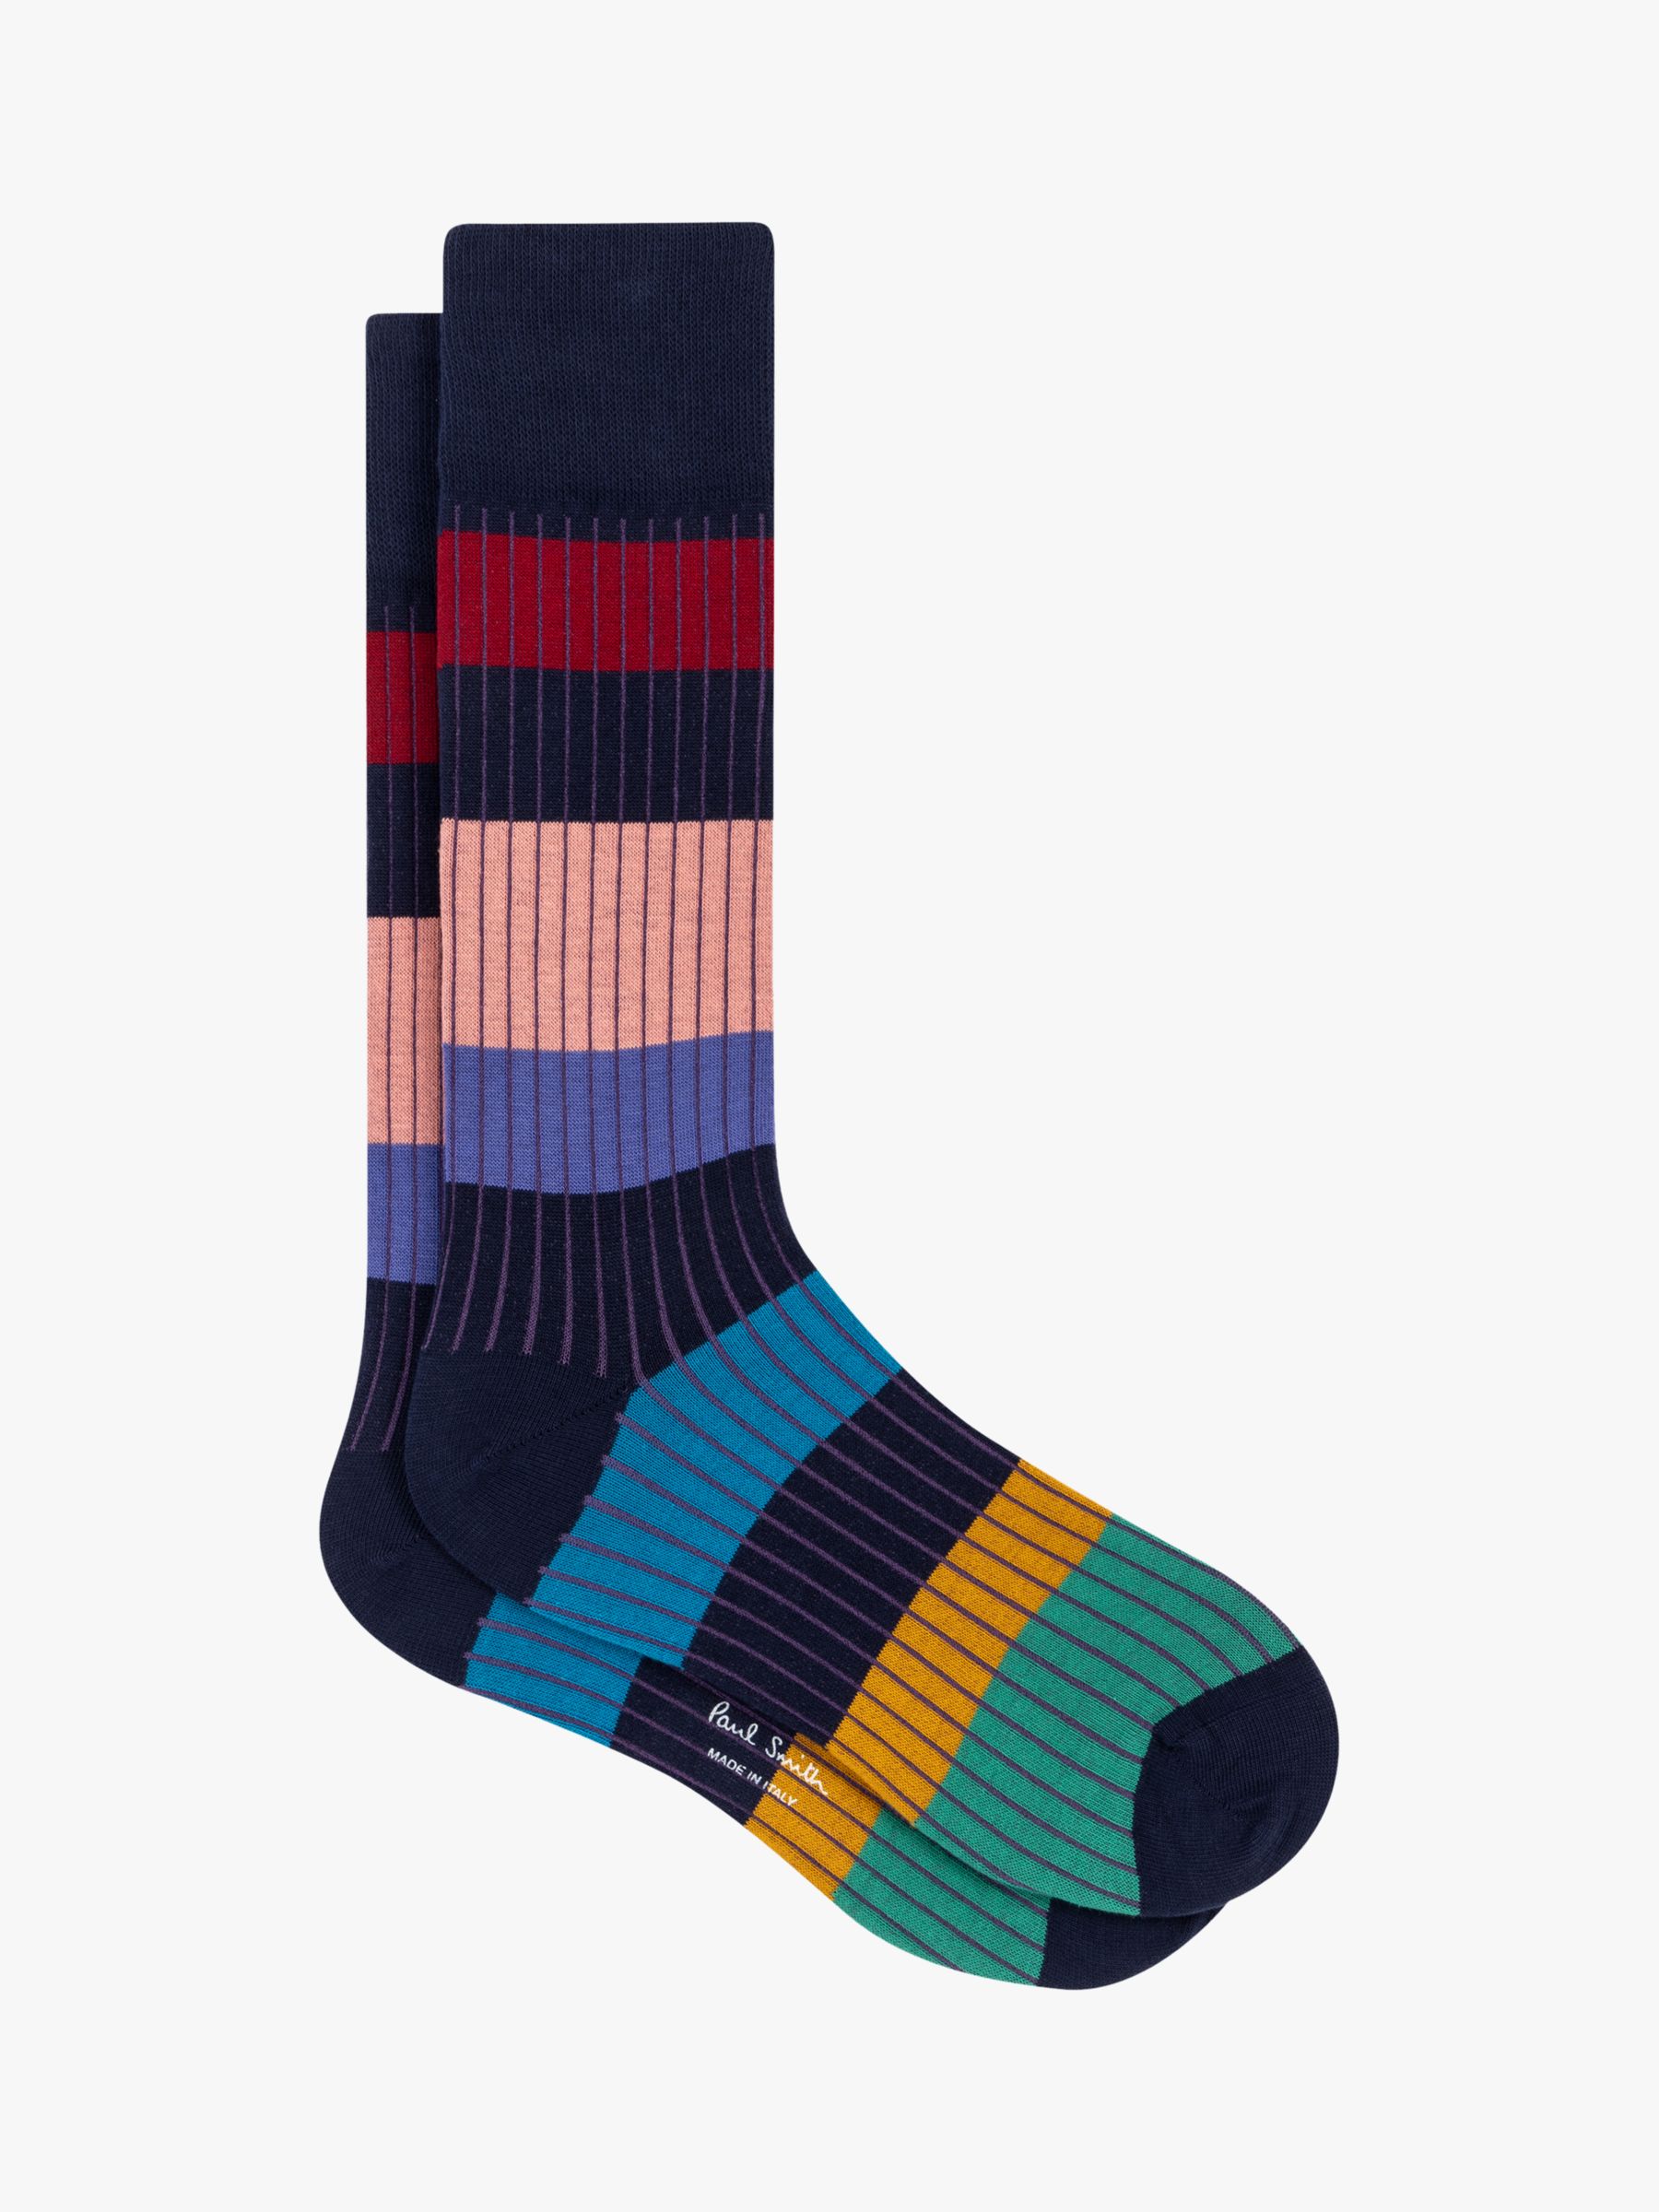 Paul Smith Errol Stripe Socks, Multi at John Lewis & Partners